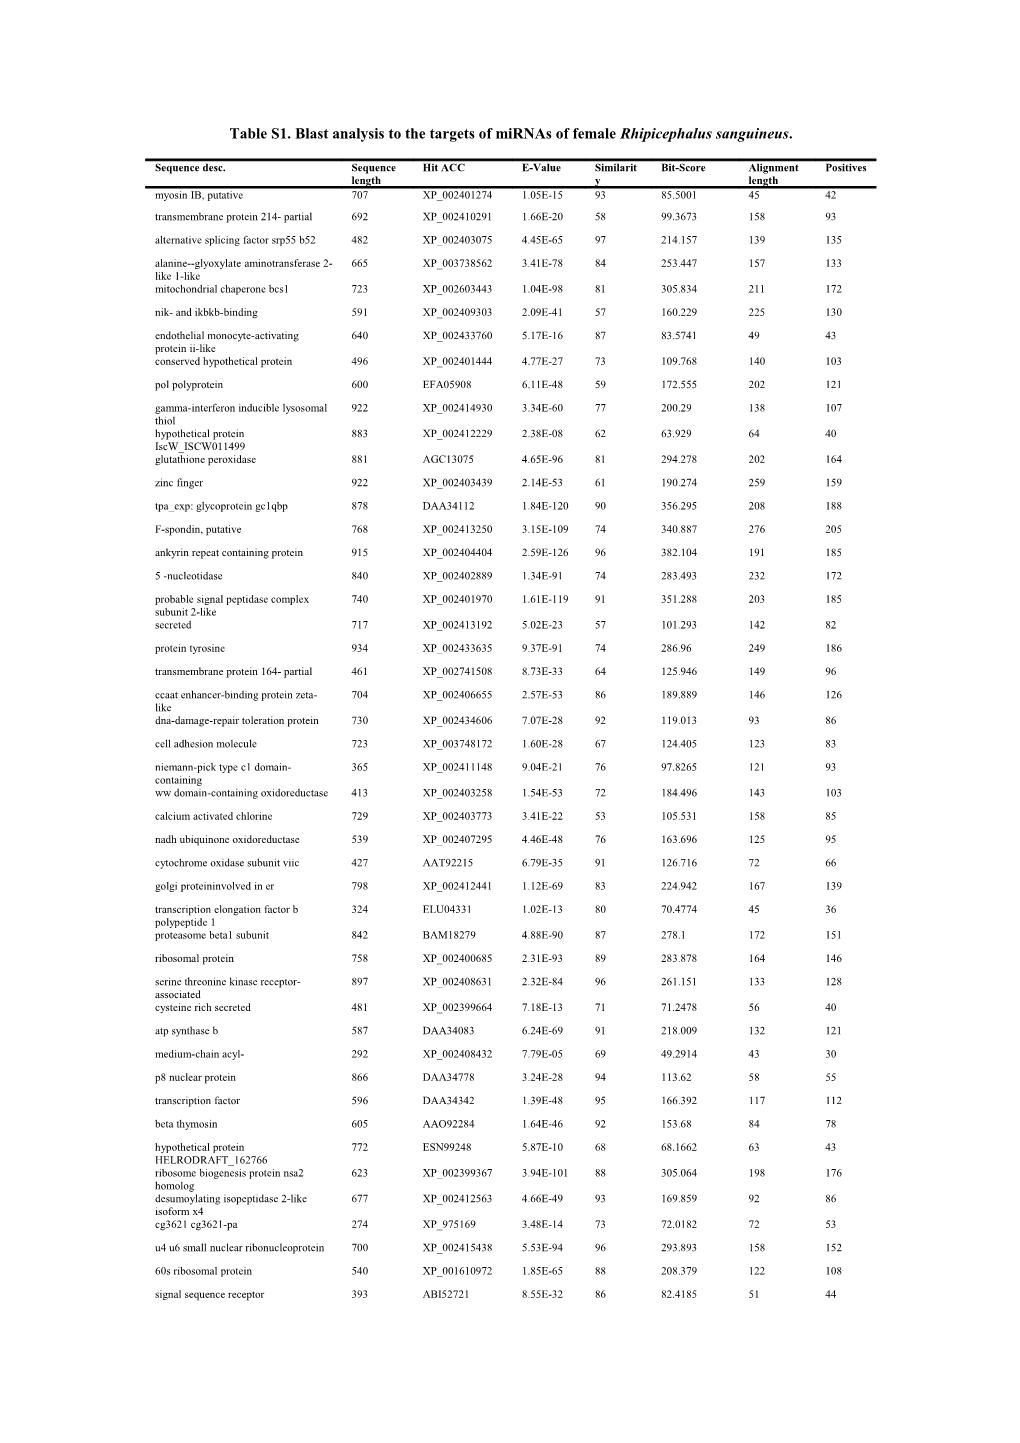 Table S1.Blast Analysis to the Targets of Mirnas Offemale Rhipicephalus Sanguineus